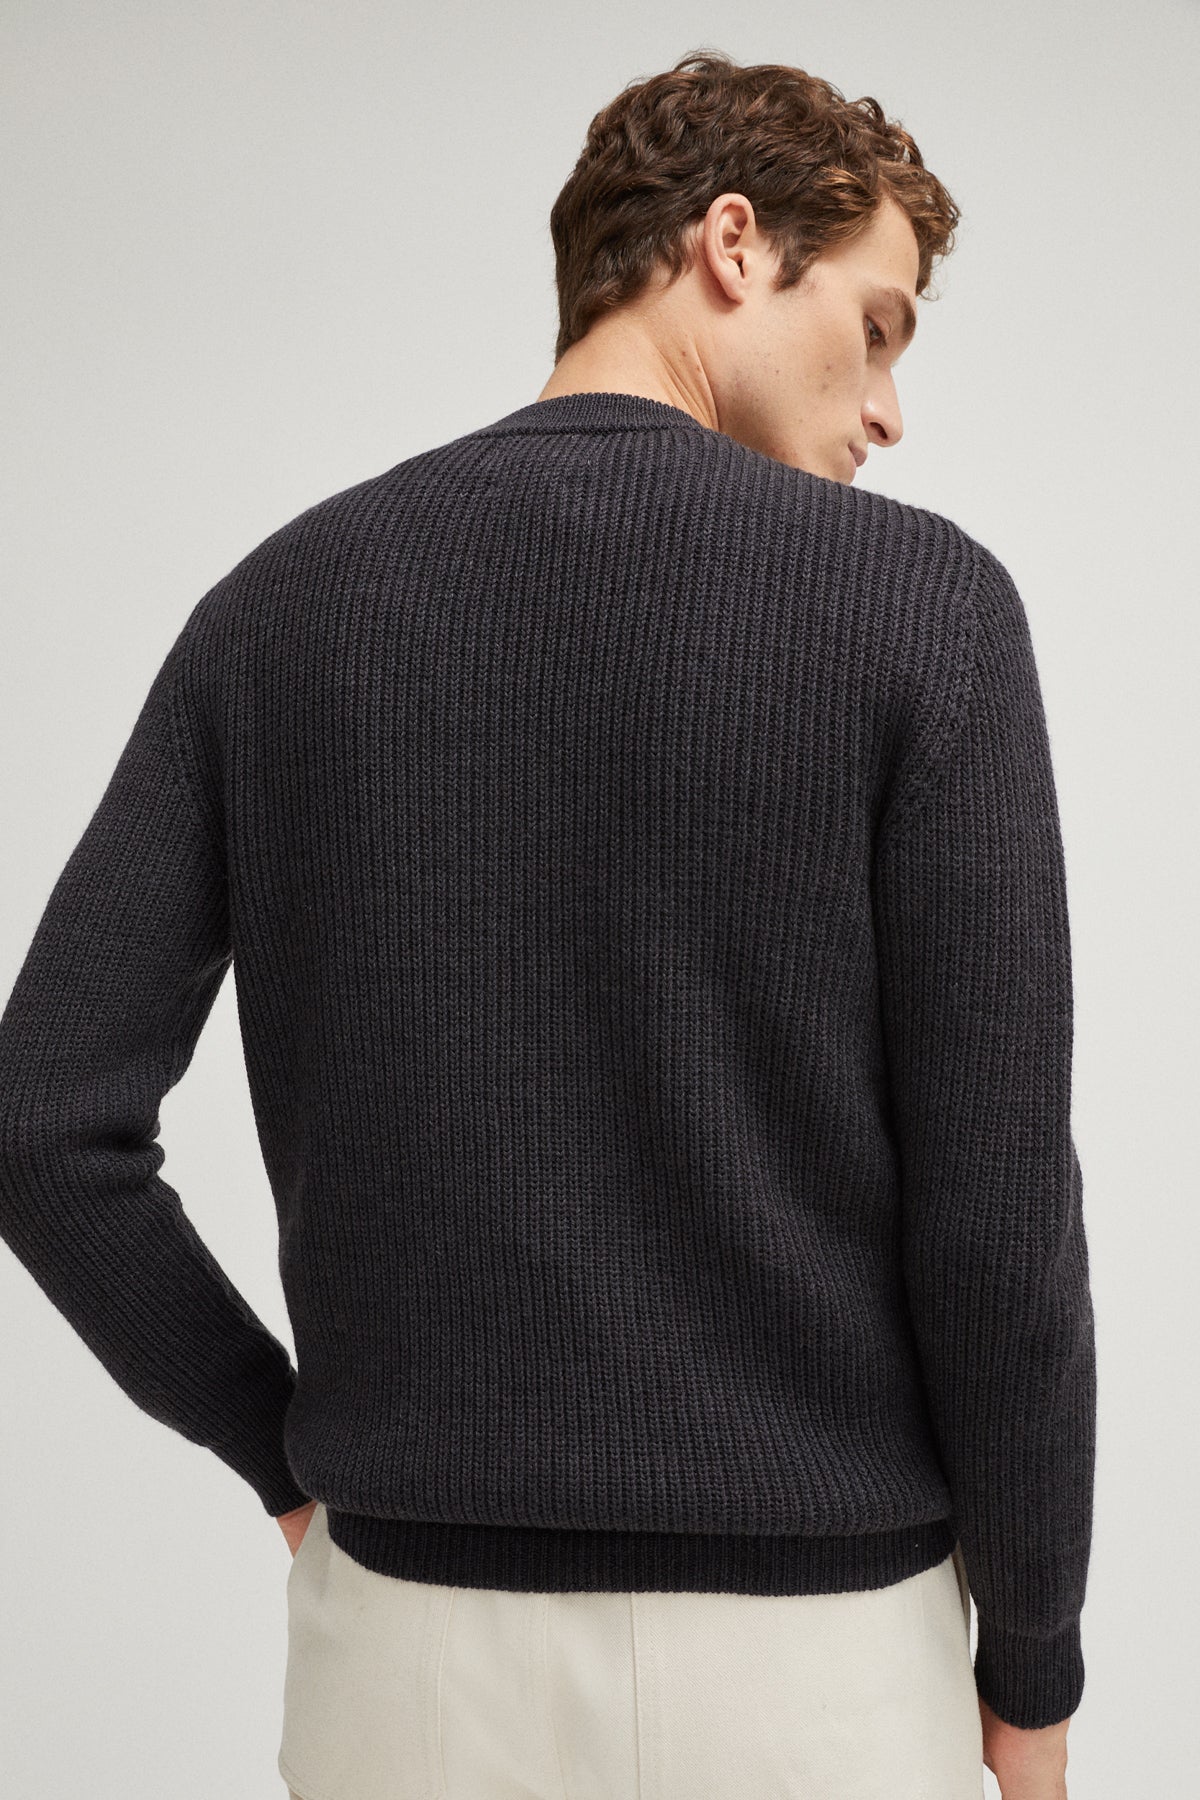 Anthracite Grey | Pearl | The Merino Wool Perkins Sweater